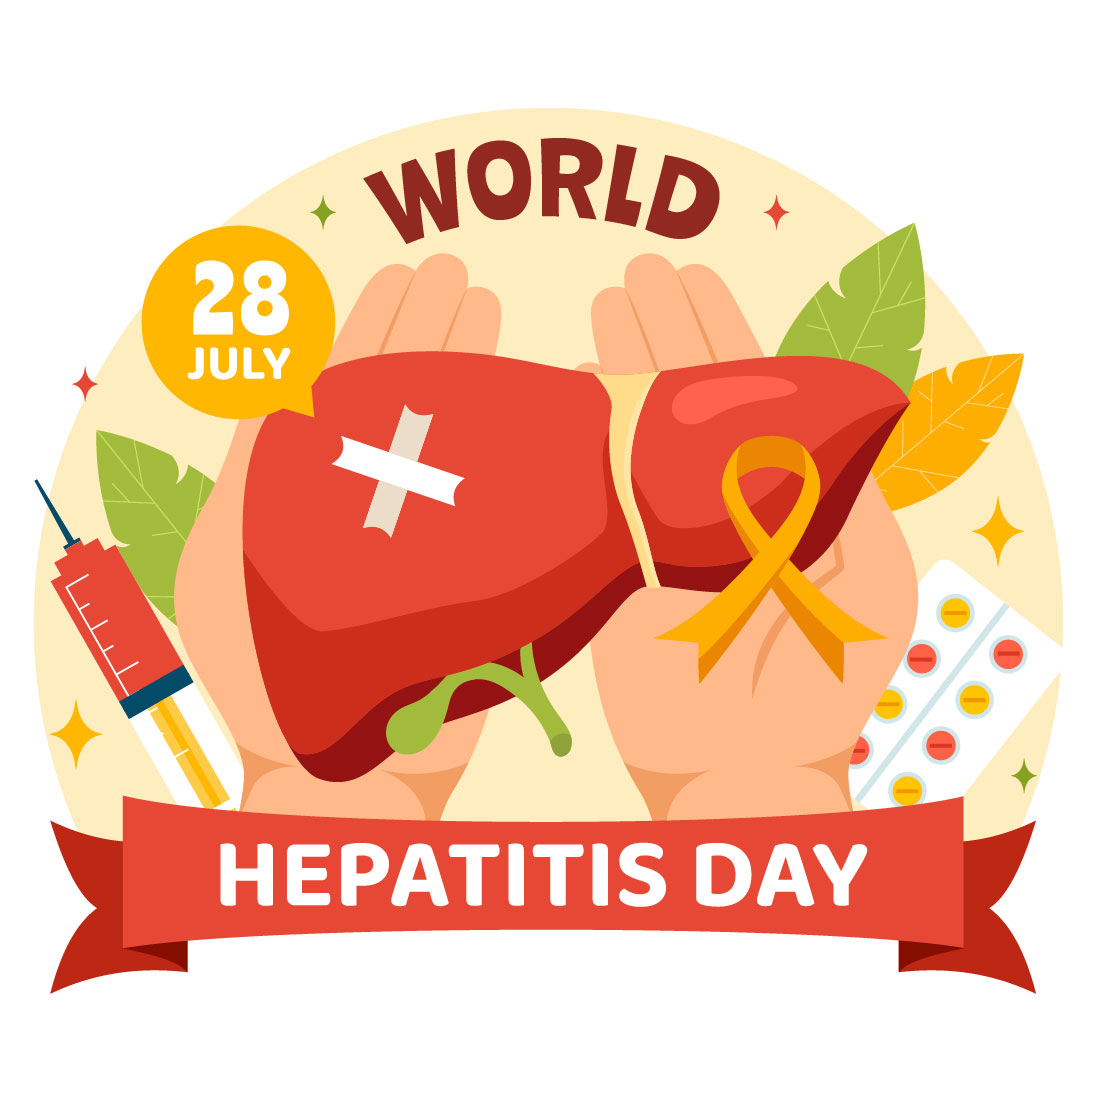 12 World Hepatitis Day Illustration preview image.